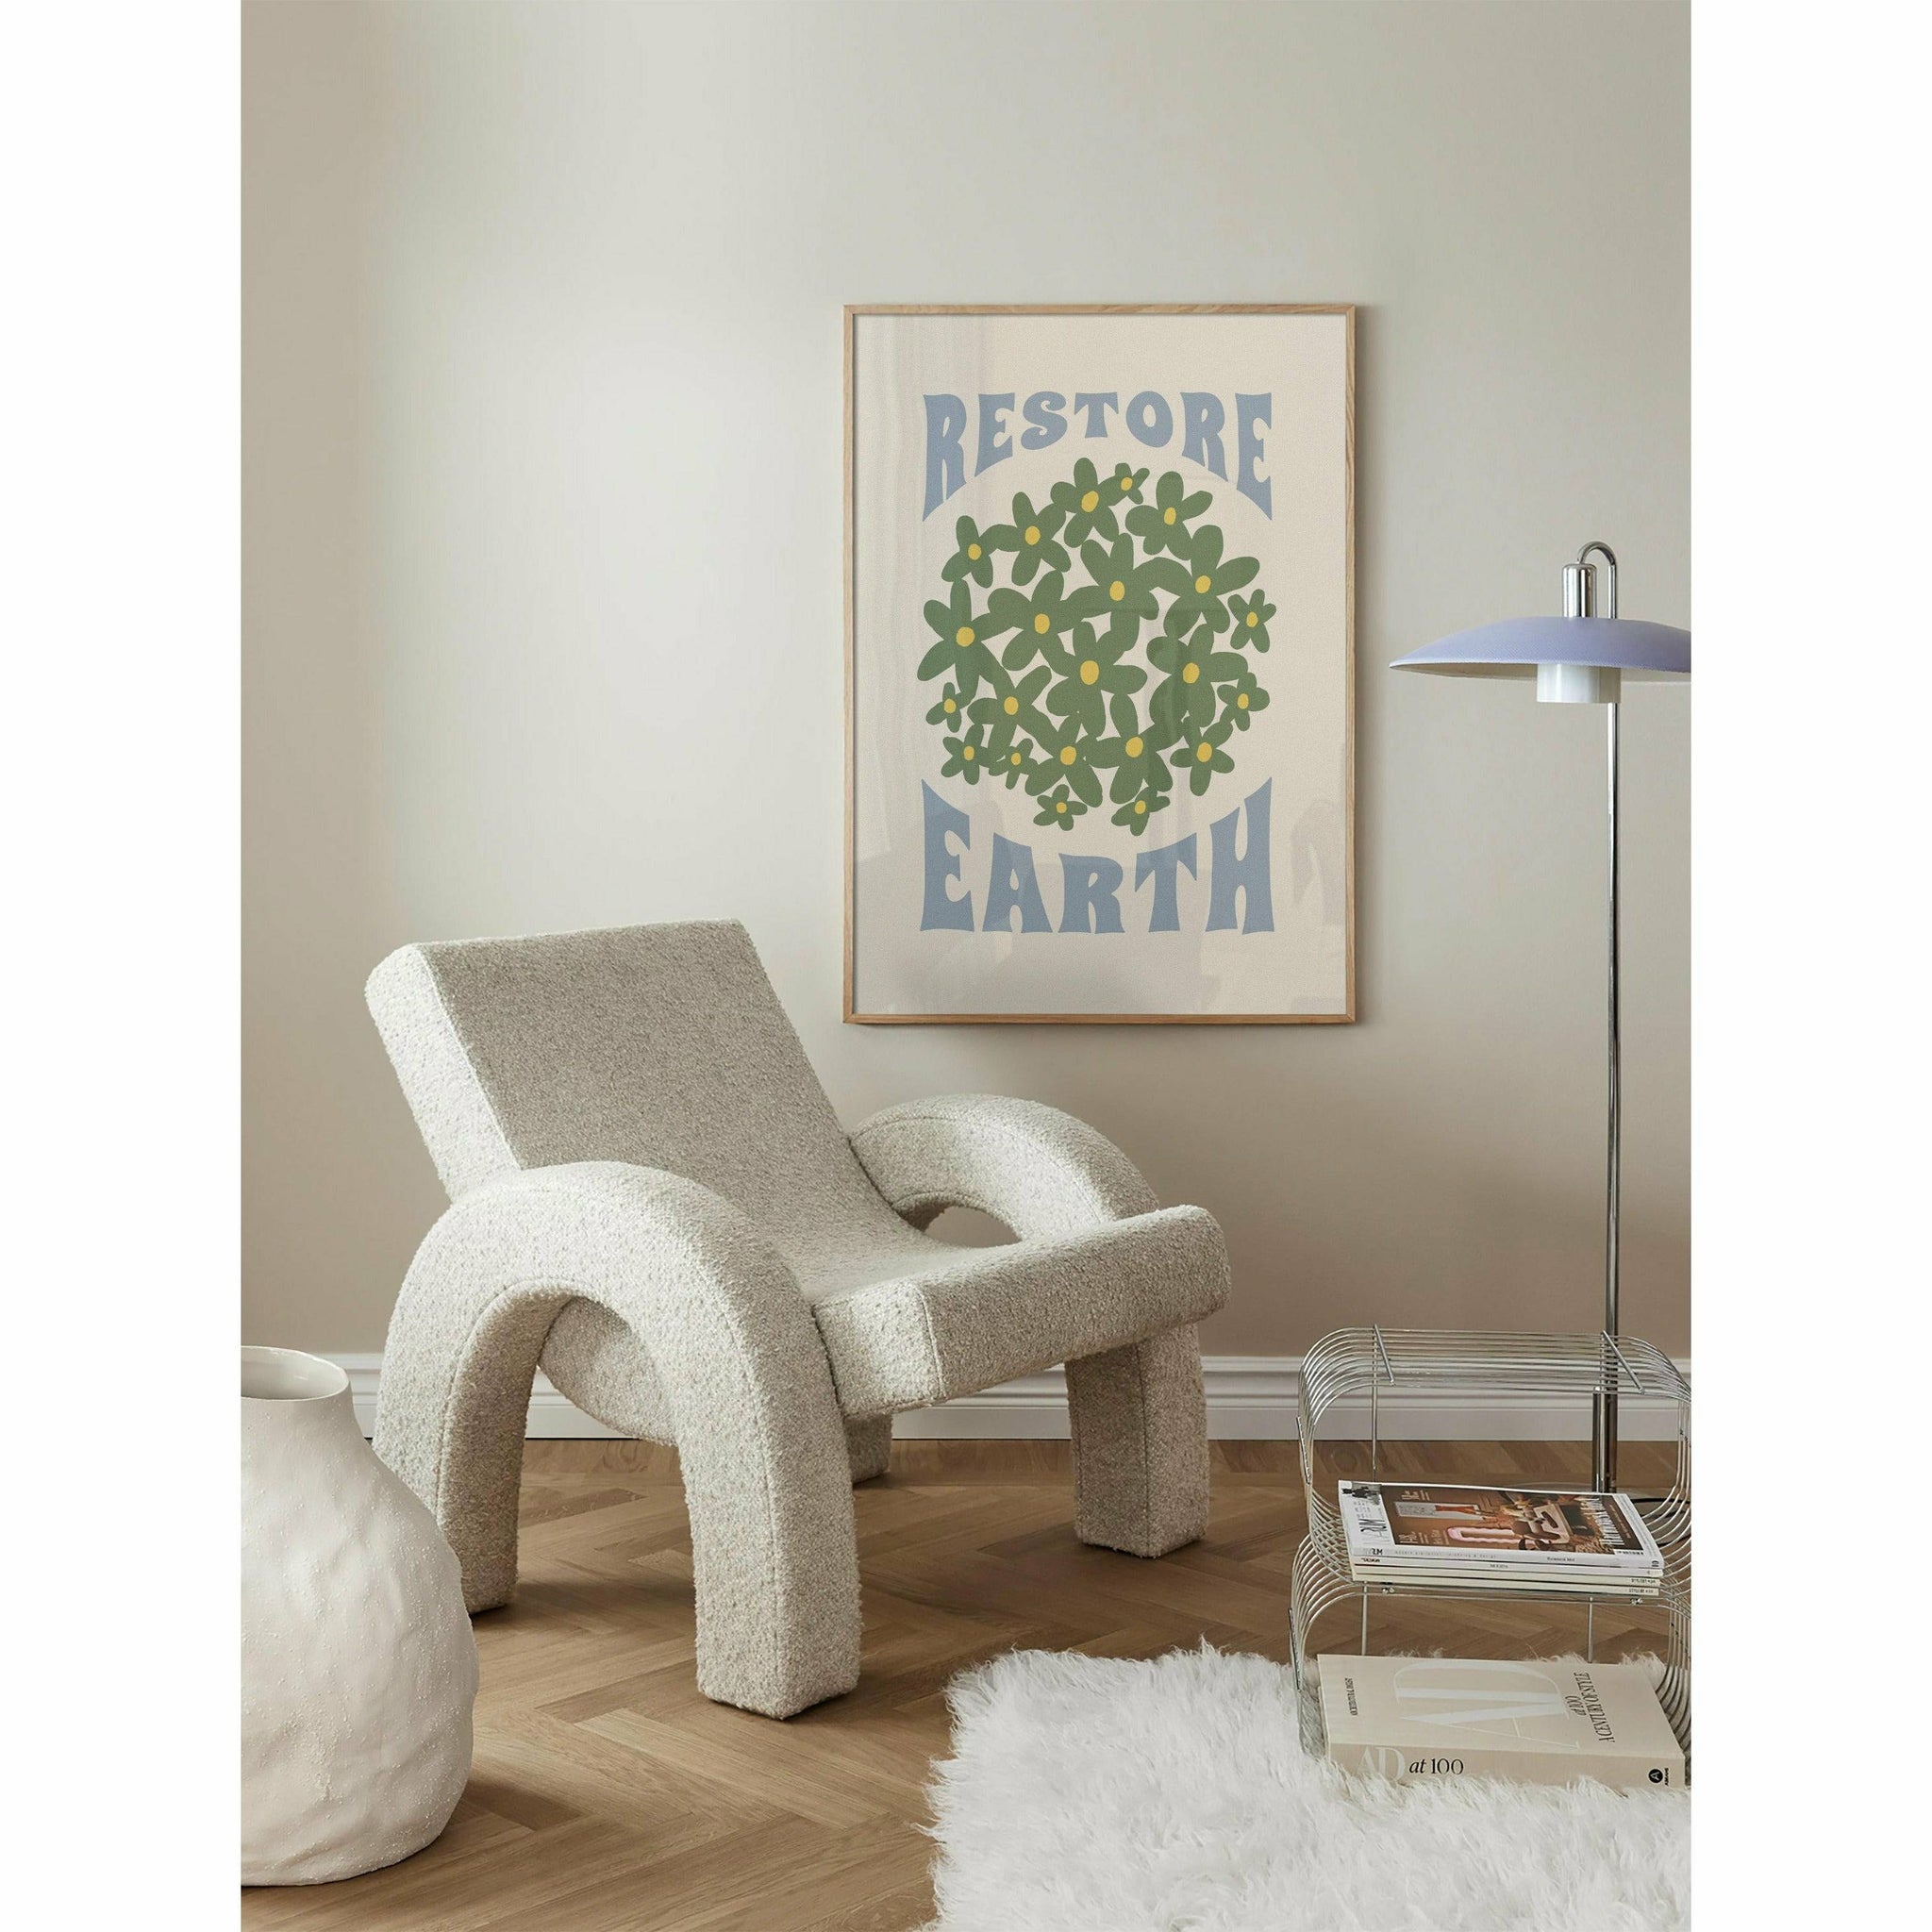 Restore Earth Poster